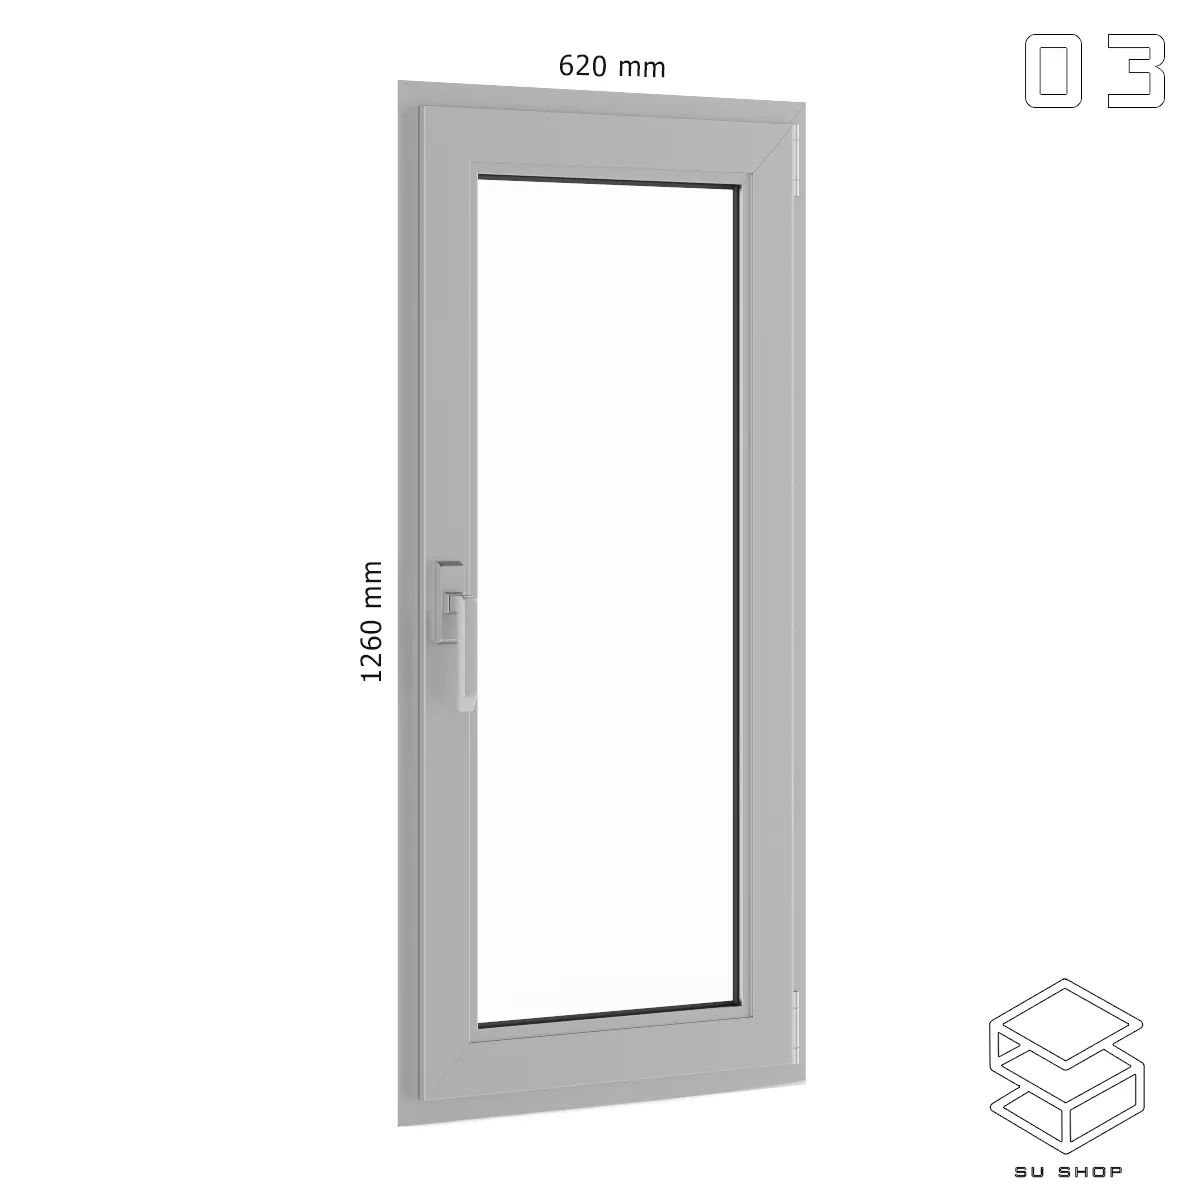 MODERN WINDOWS - SKETCHUP 3D MODEL - VRAY OR ENSCAPE - ID16770